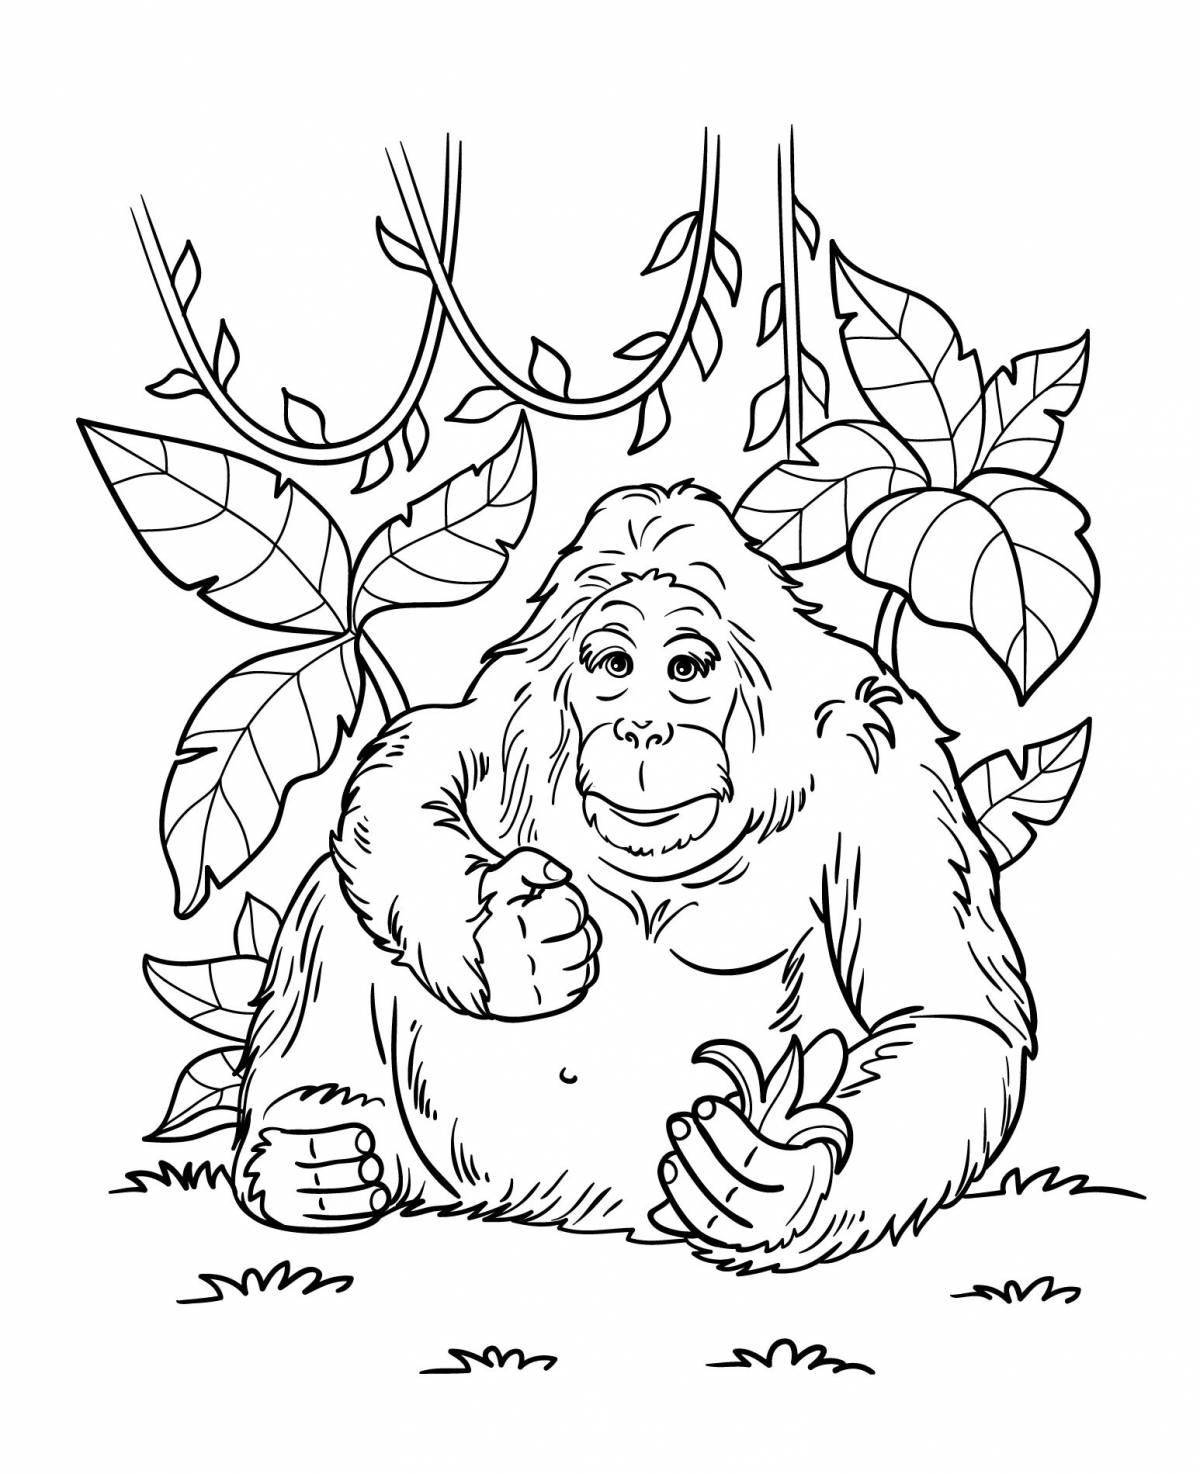 Fun orangutan coloring book